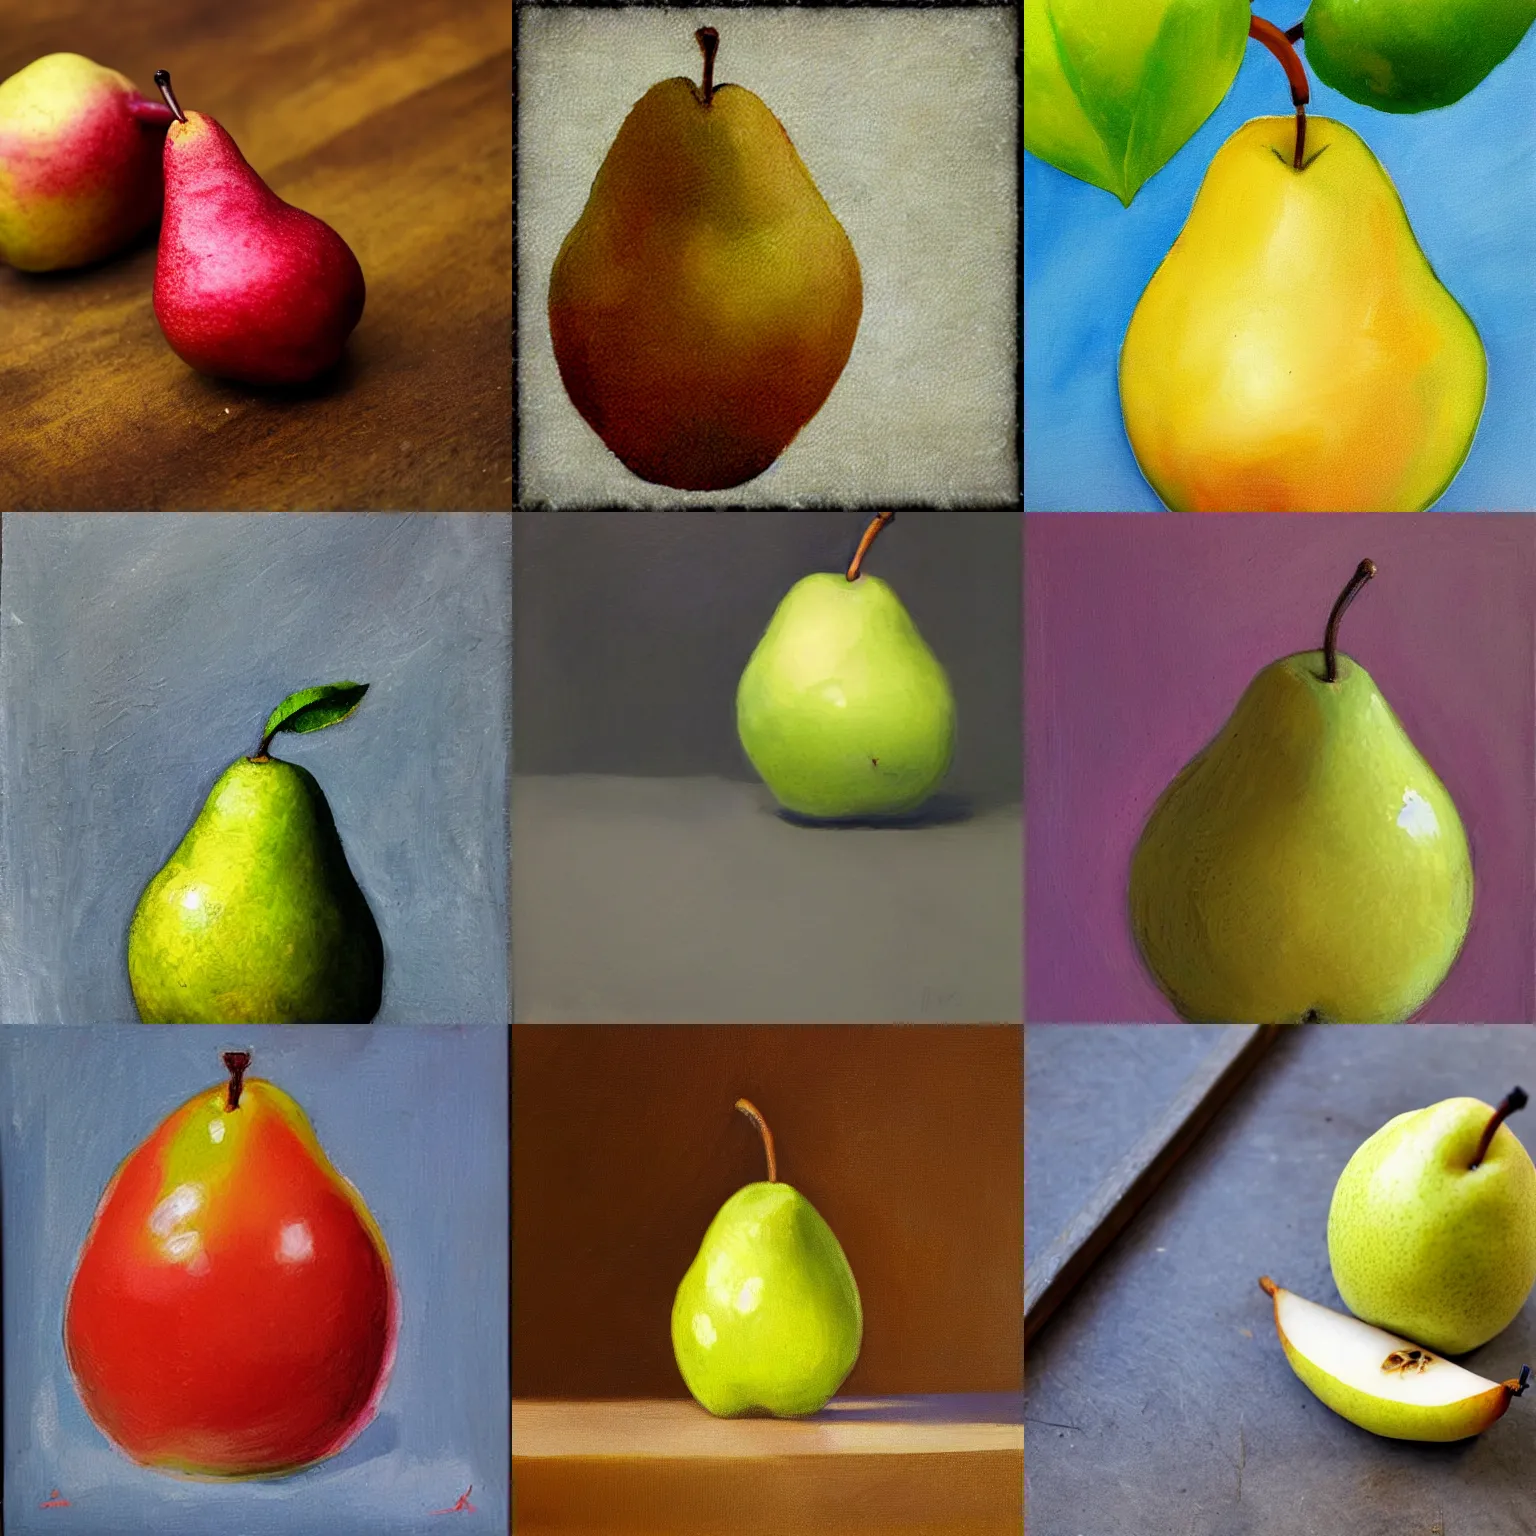 Prompt: Juicy pear